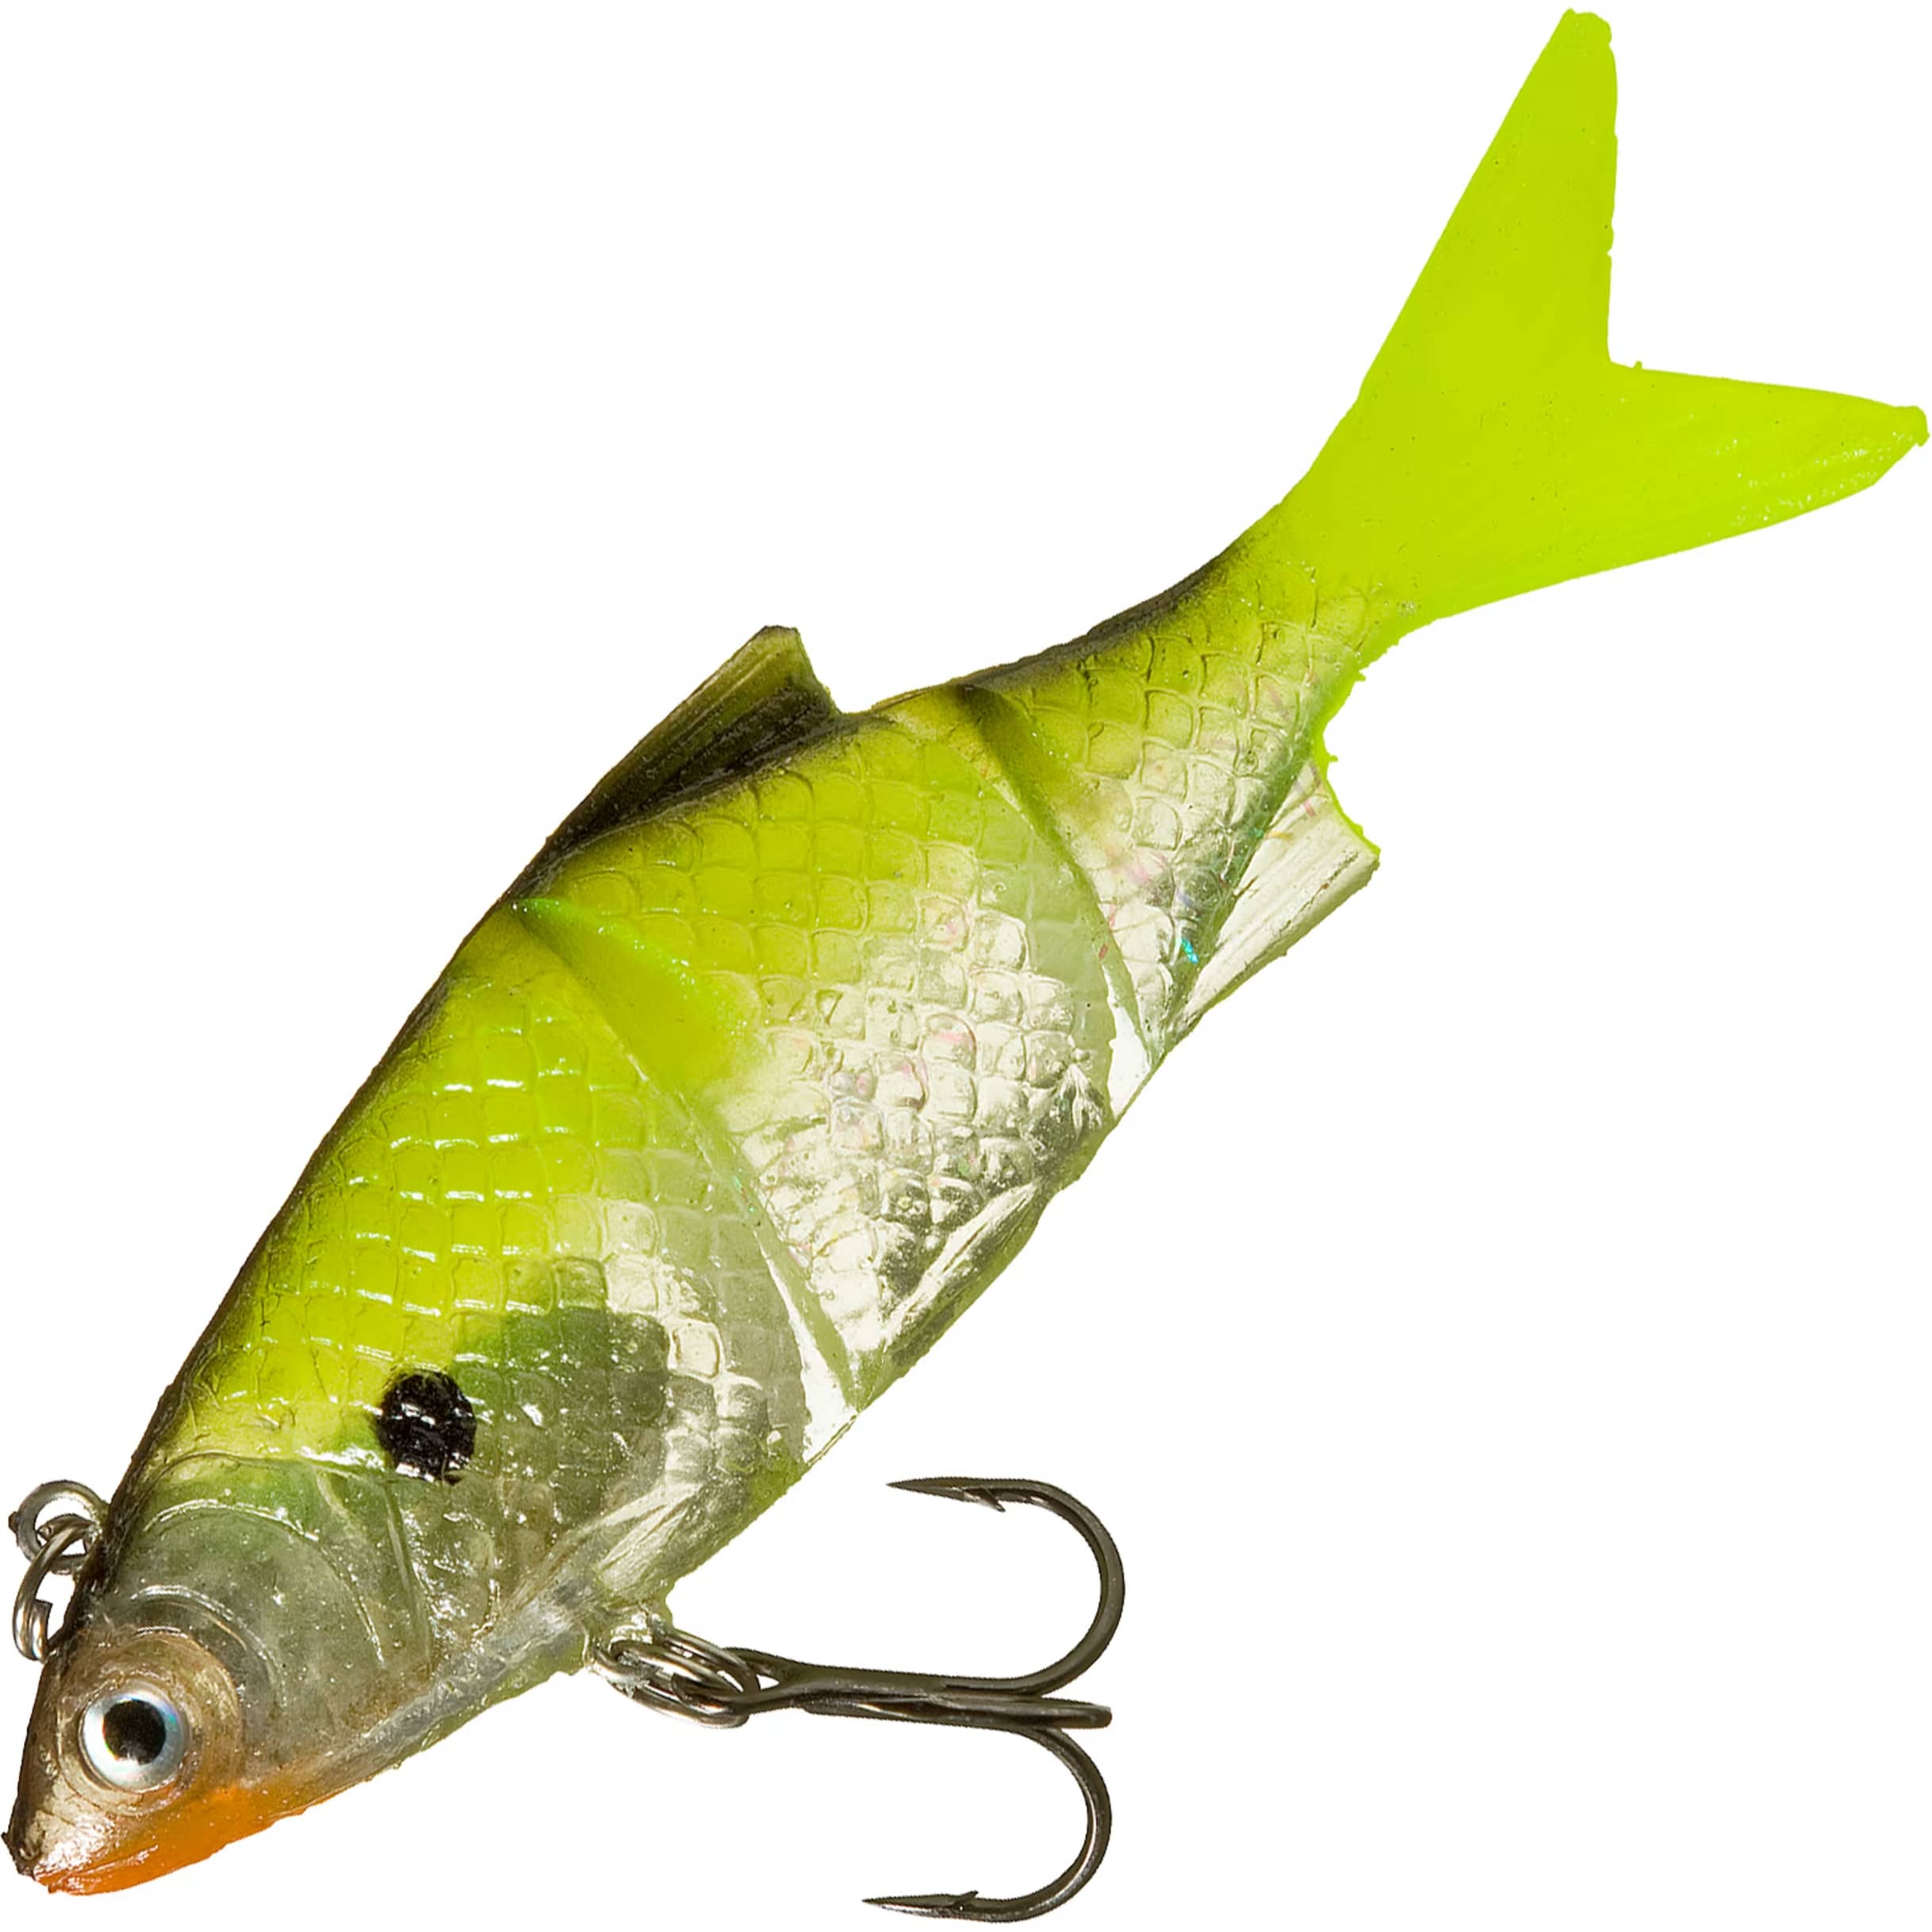 Lake Wedowee Store: Bass Pro Shops CatMaxx Monofilament Fishing Line - Hi- Vis Green - 30 lb